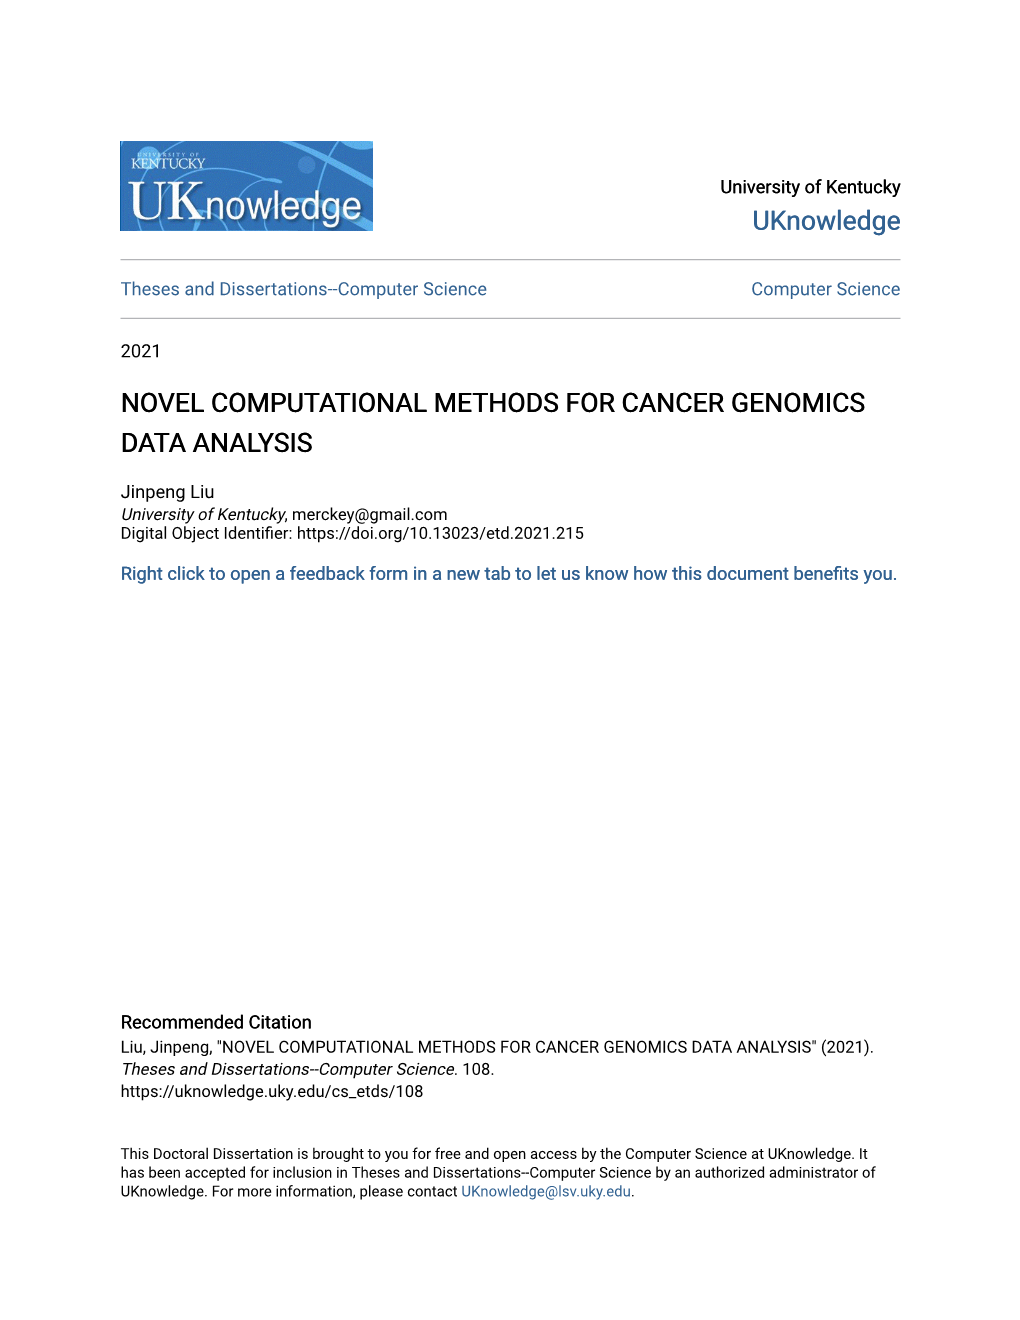 Novel Computational Methods for Cancer Genomics Data Analysis